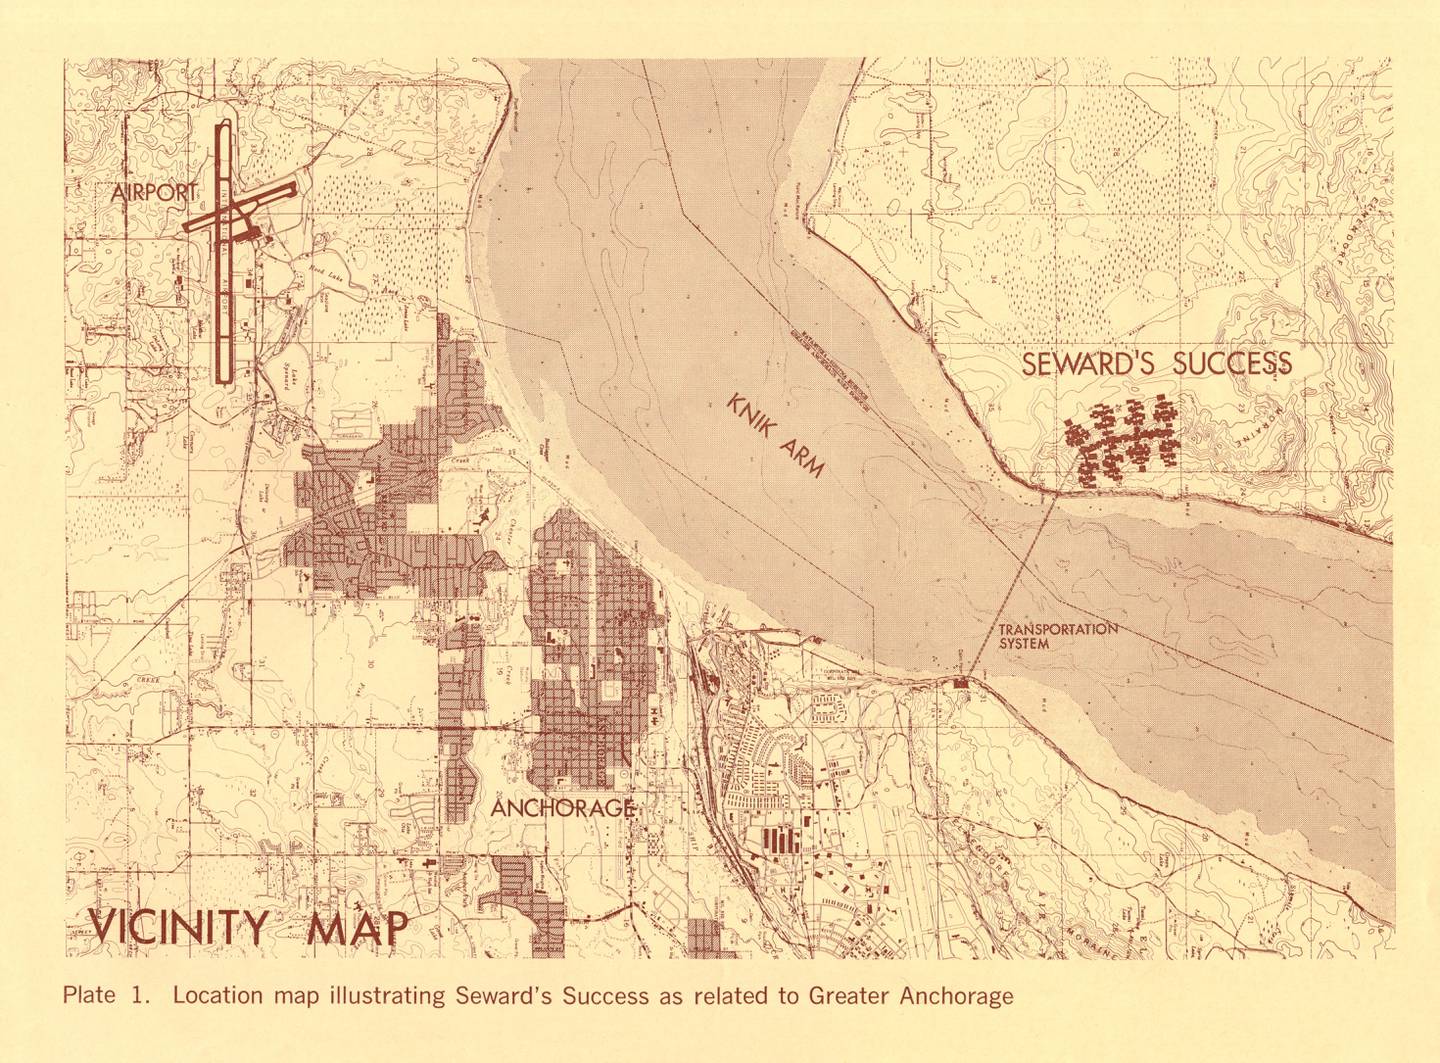 A 1969 location map Seward Success 21st century city